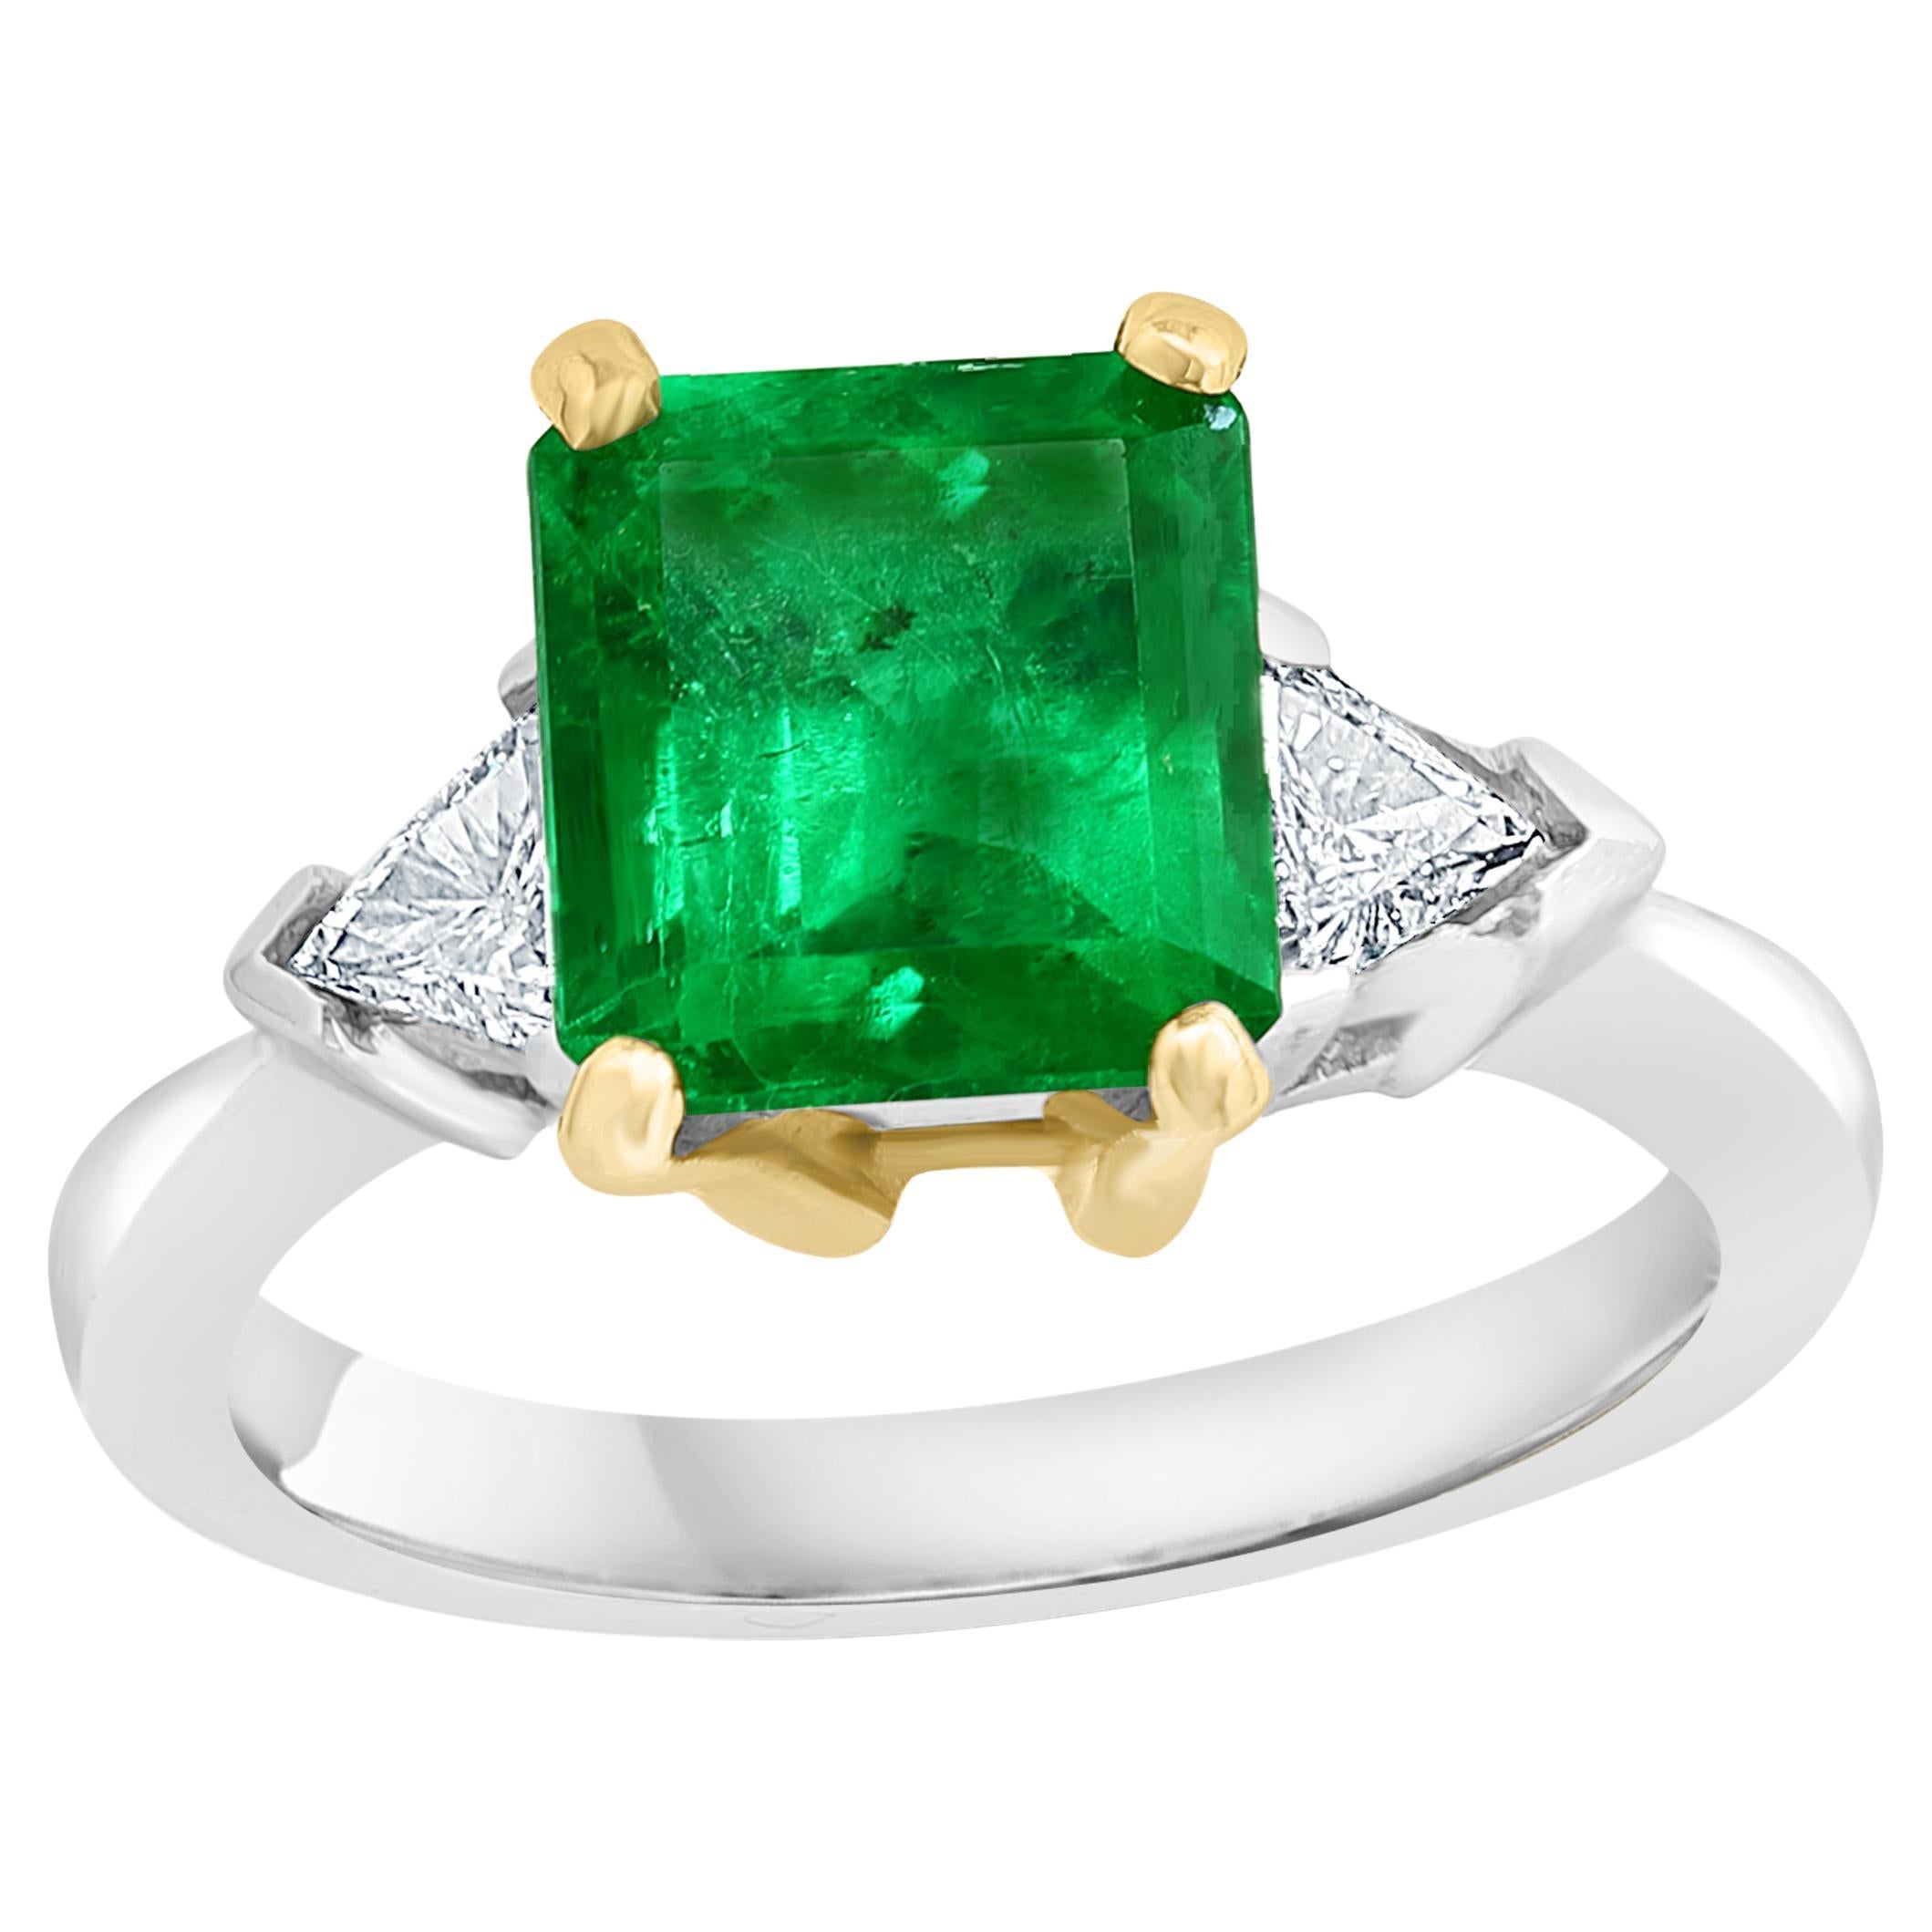 2.7 Carat Emerald Cut Colombian Emerald & 0.60Ct Diamond Ring 18K White/Y Gold